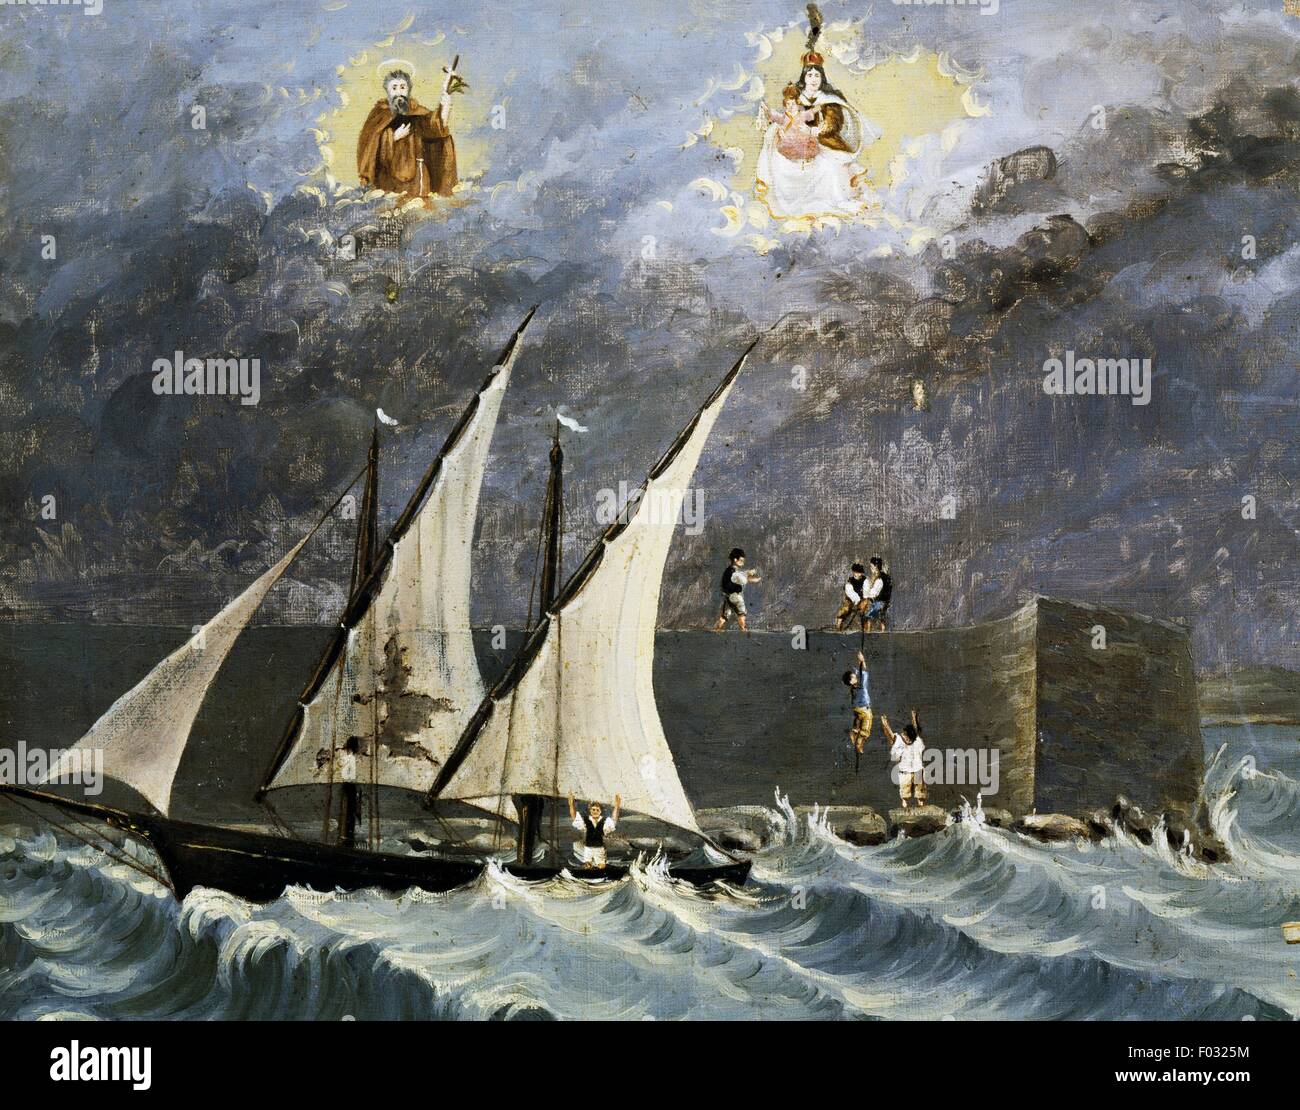 Sailing ship on a stormy sea, ex voto, Italy, Portosalvo church, Torre del Greco, Campania, Italy, 19th century. Stock Photo